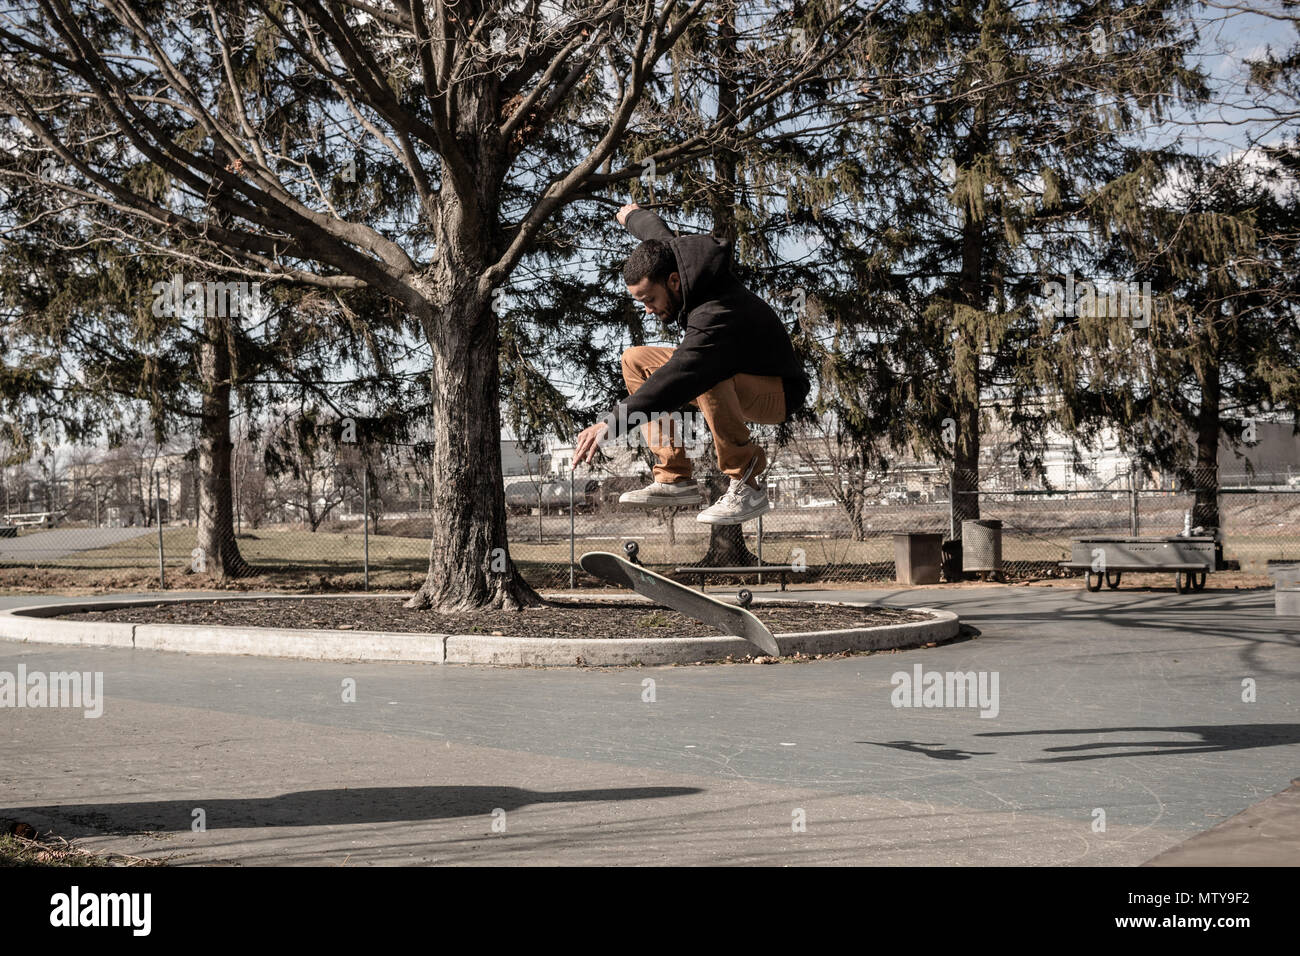 skateboarding at a small skate park Stock Photo